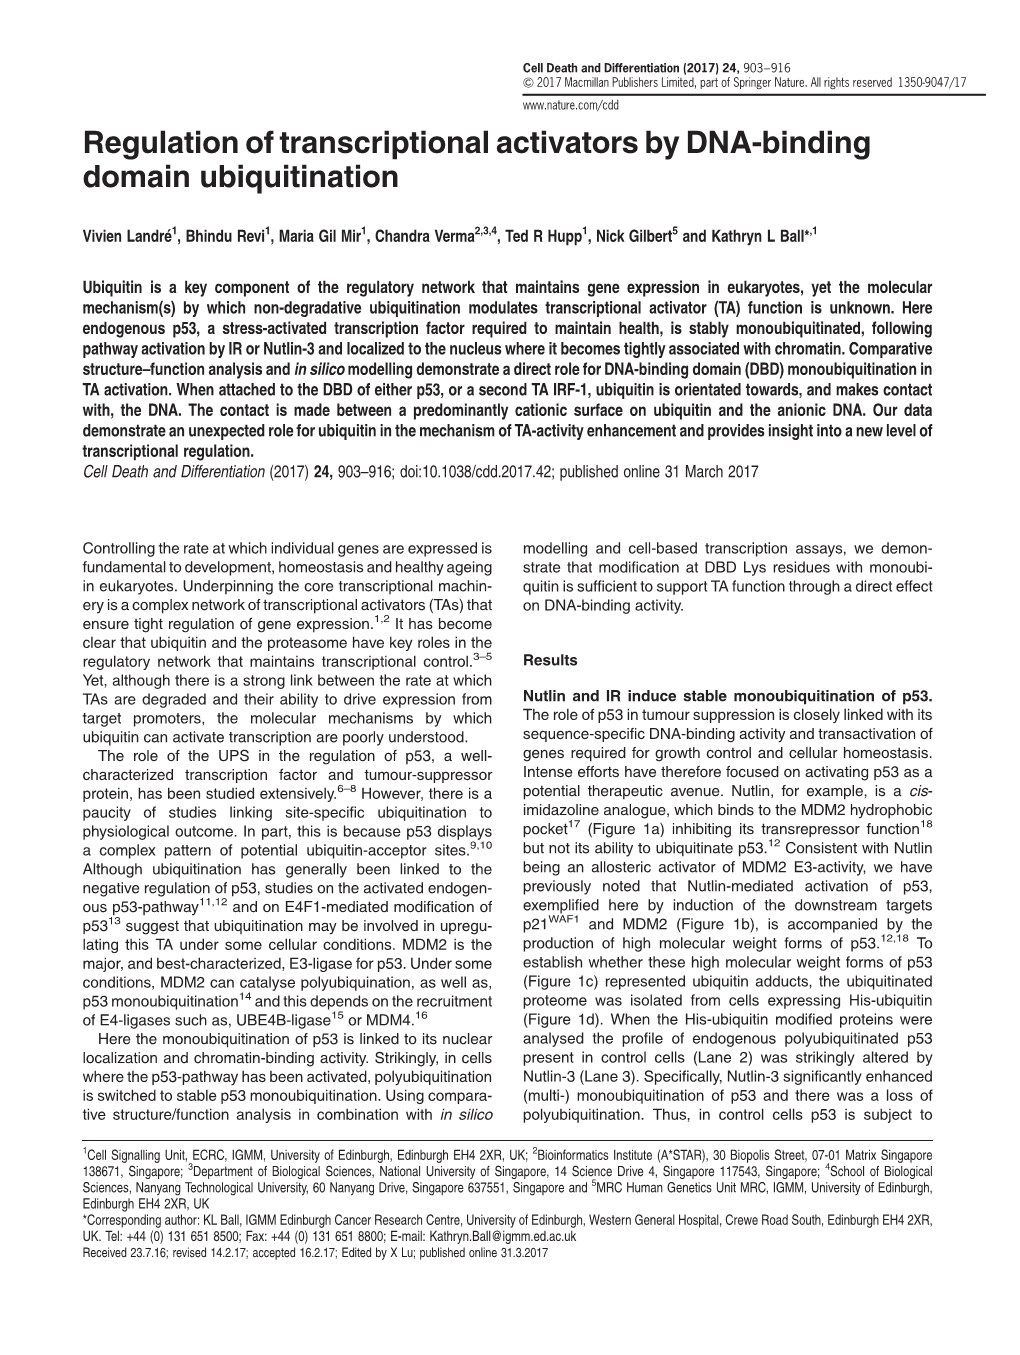 Regulation of Transcriptional Activators by DNA-Binding Domain Ubiquitination